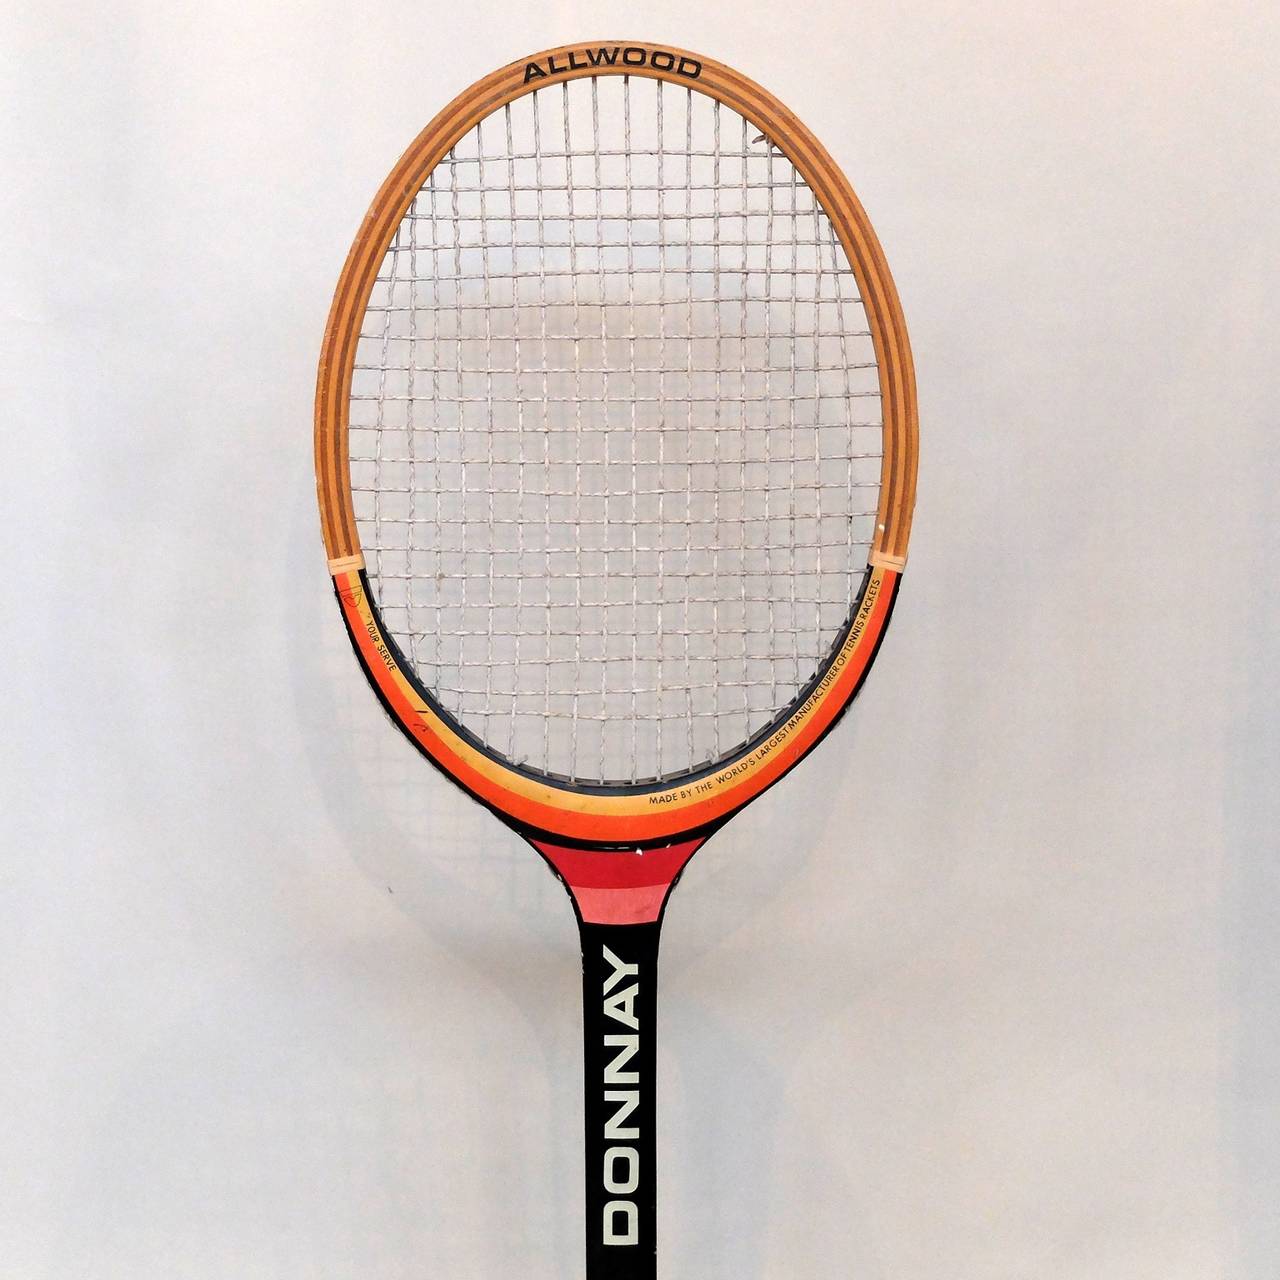 North American Giant Shop Display Tennis Racquet